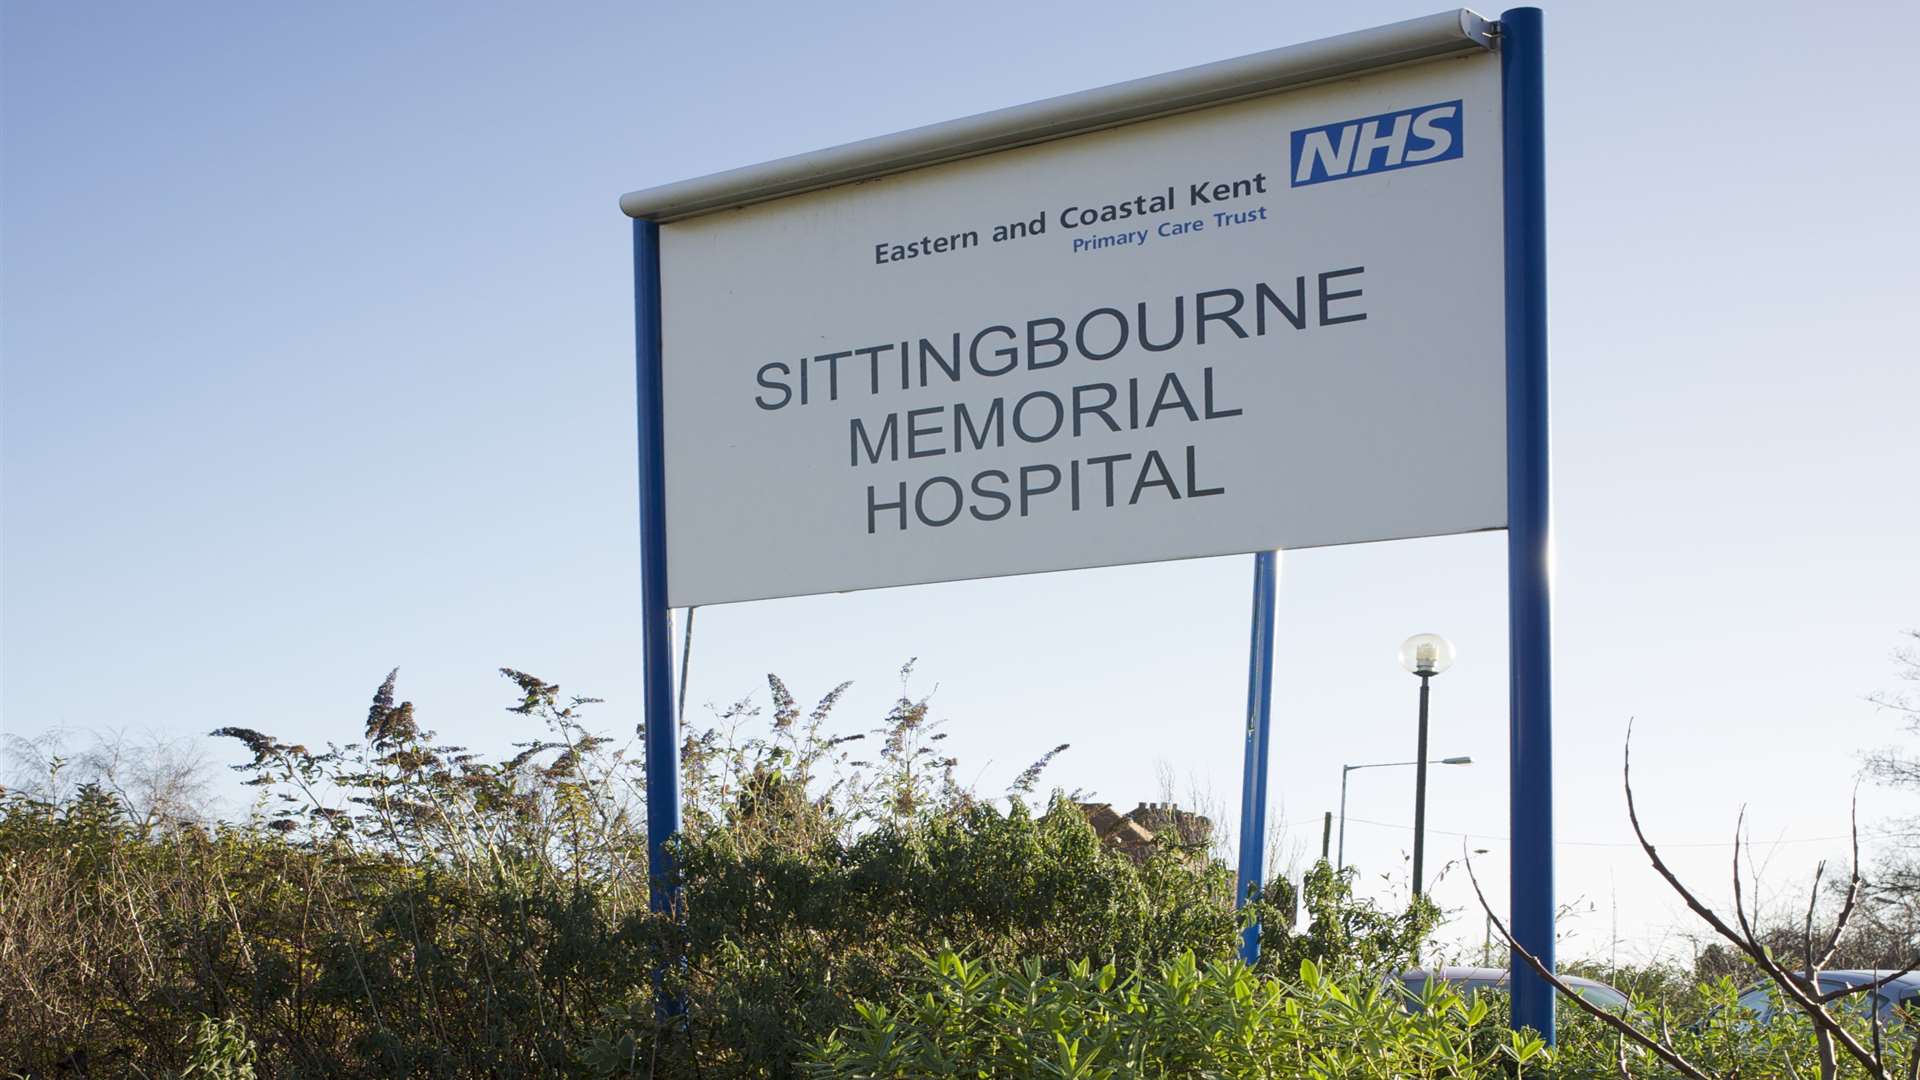 Sittingbourne Memorial Hospital in Bell Road